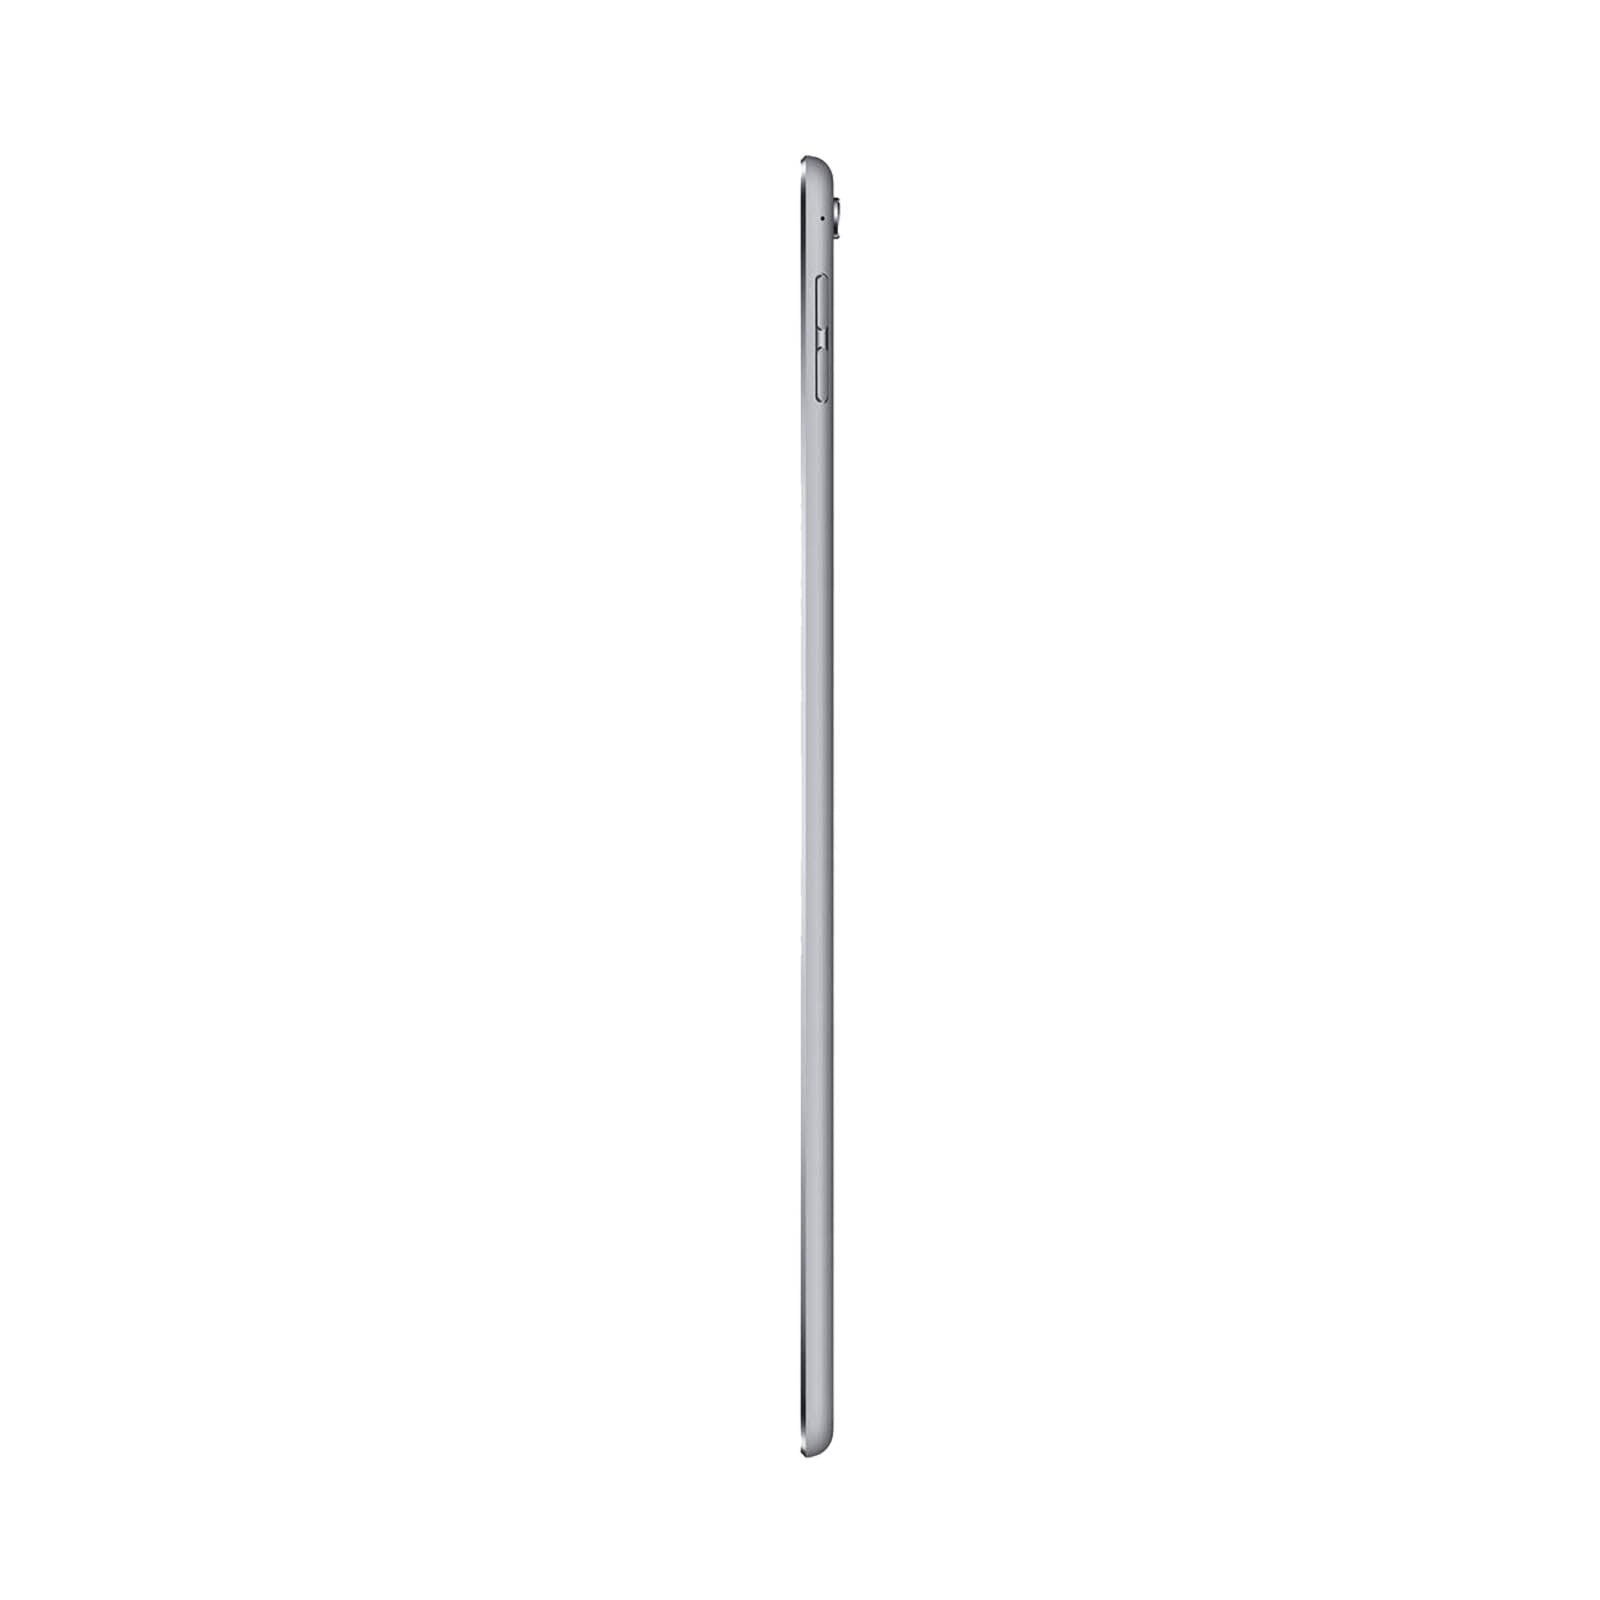 iPad Pro 9.7 Inch 256GB Space Grey Very Good - WiFi